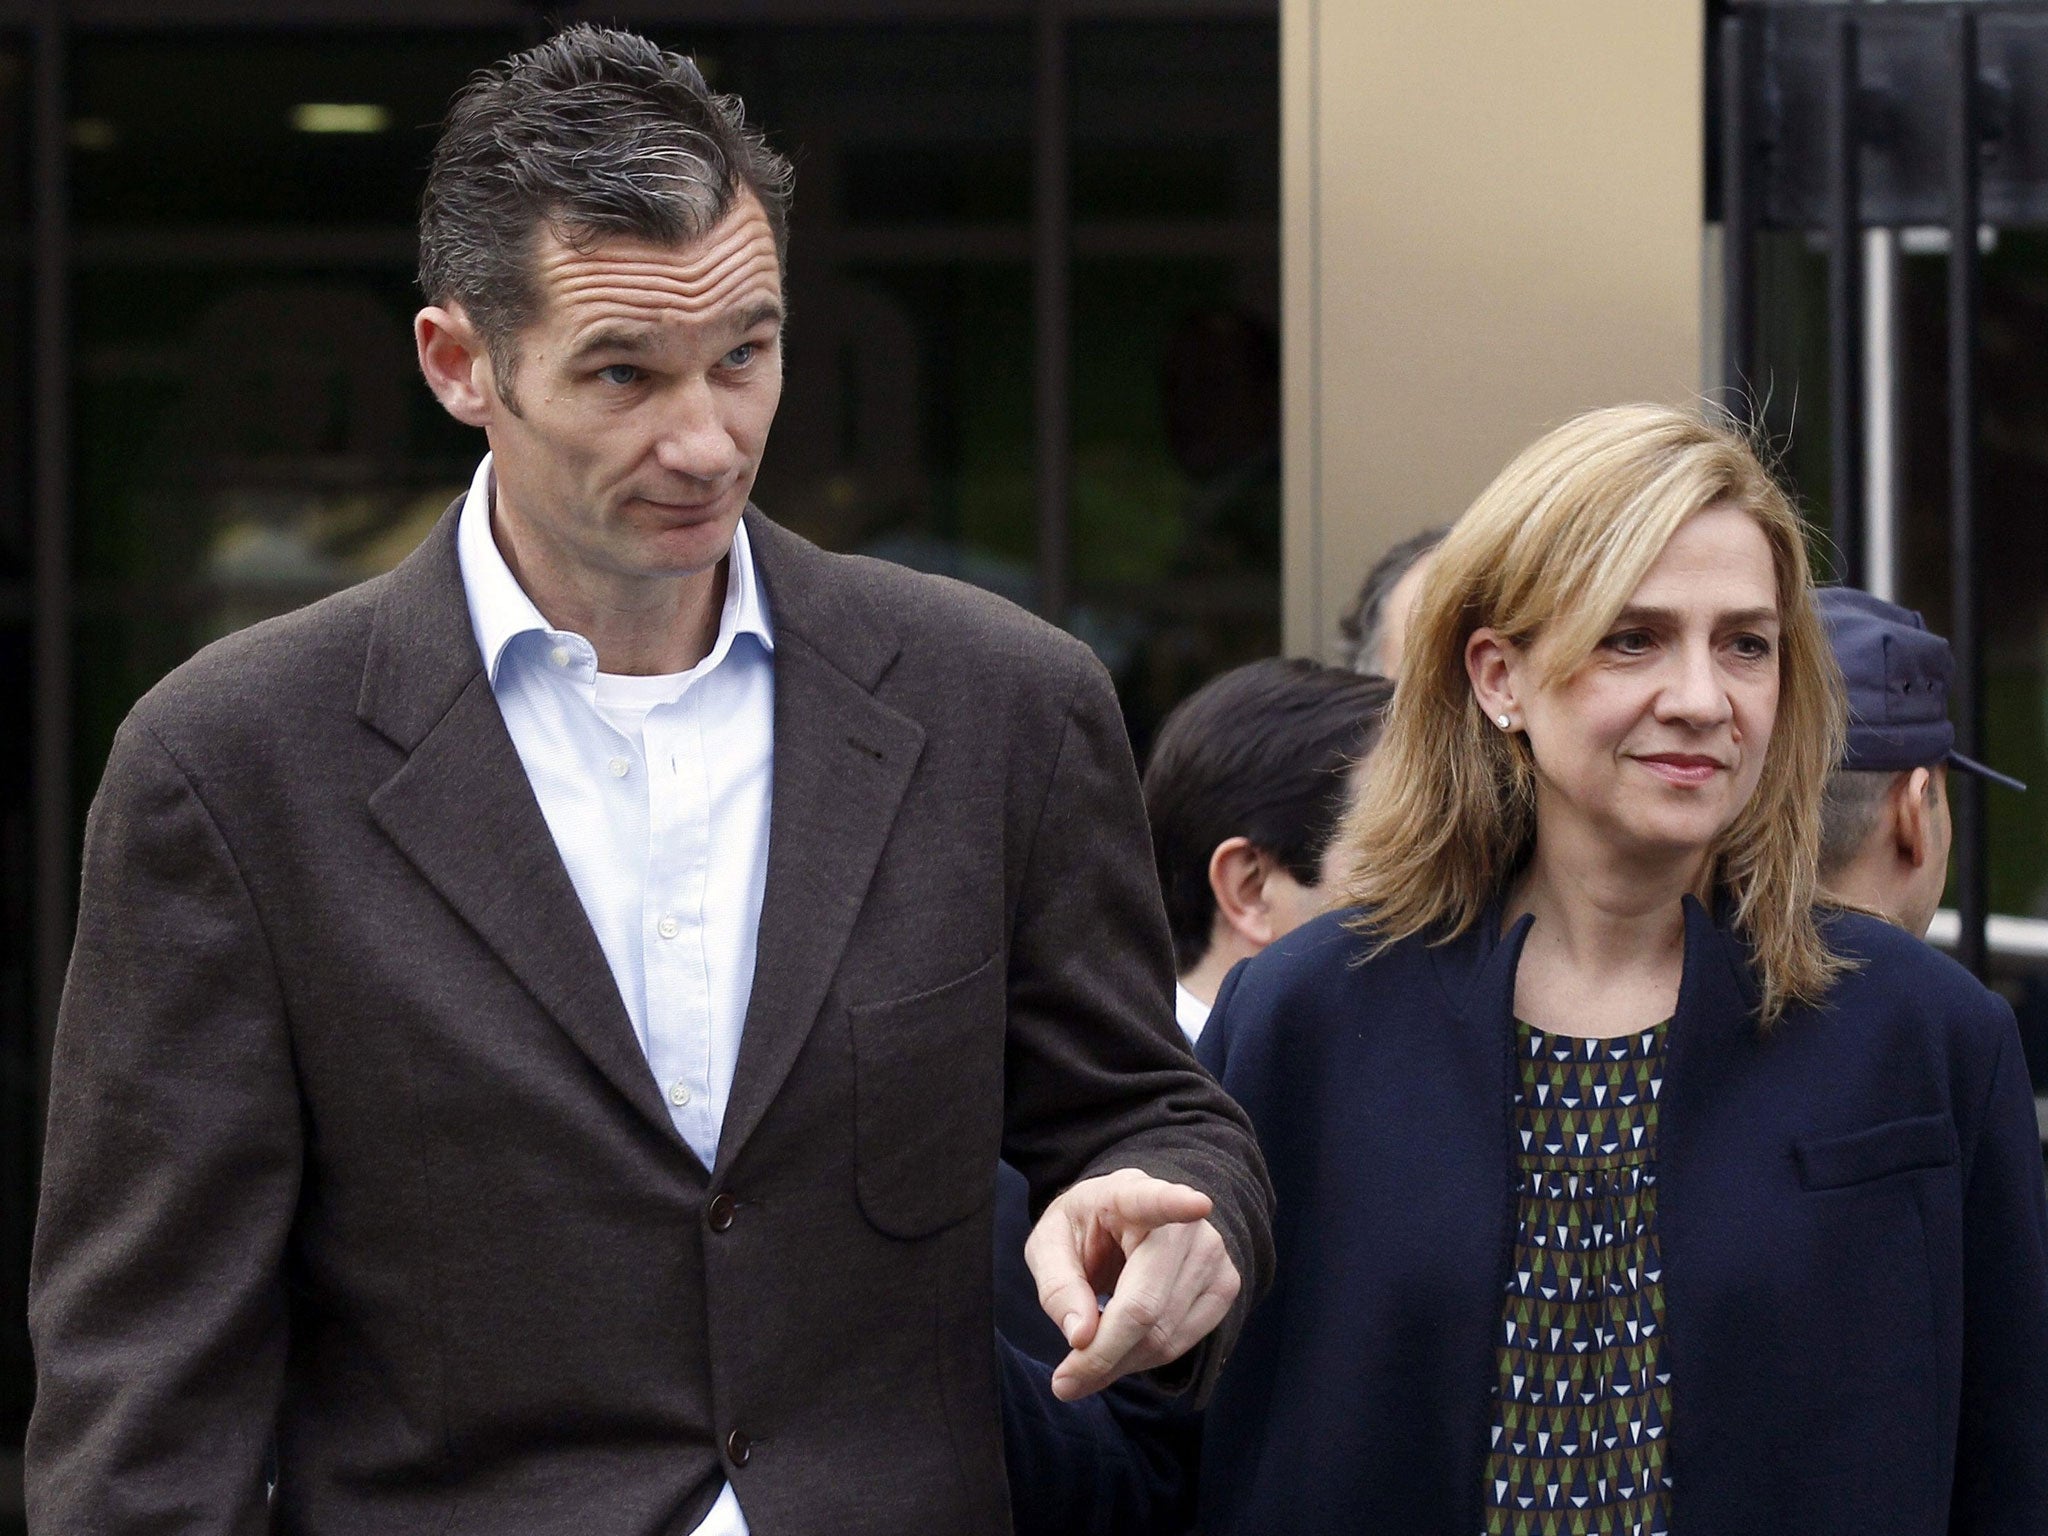 Spain’s Princess Cristina, with husband Inaki Urdangarin, is a suspect in a corruption case